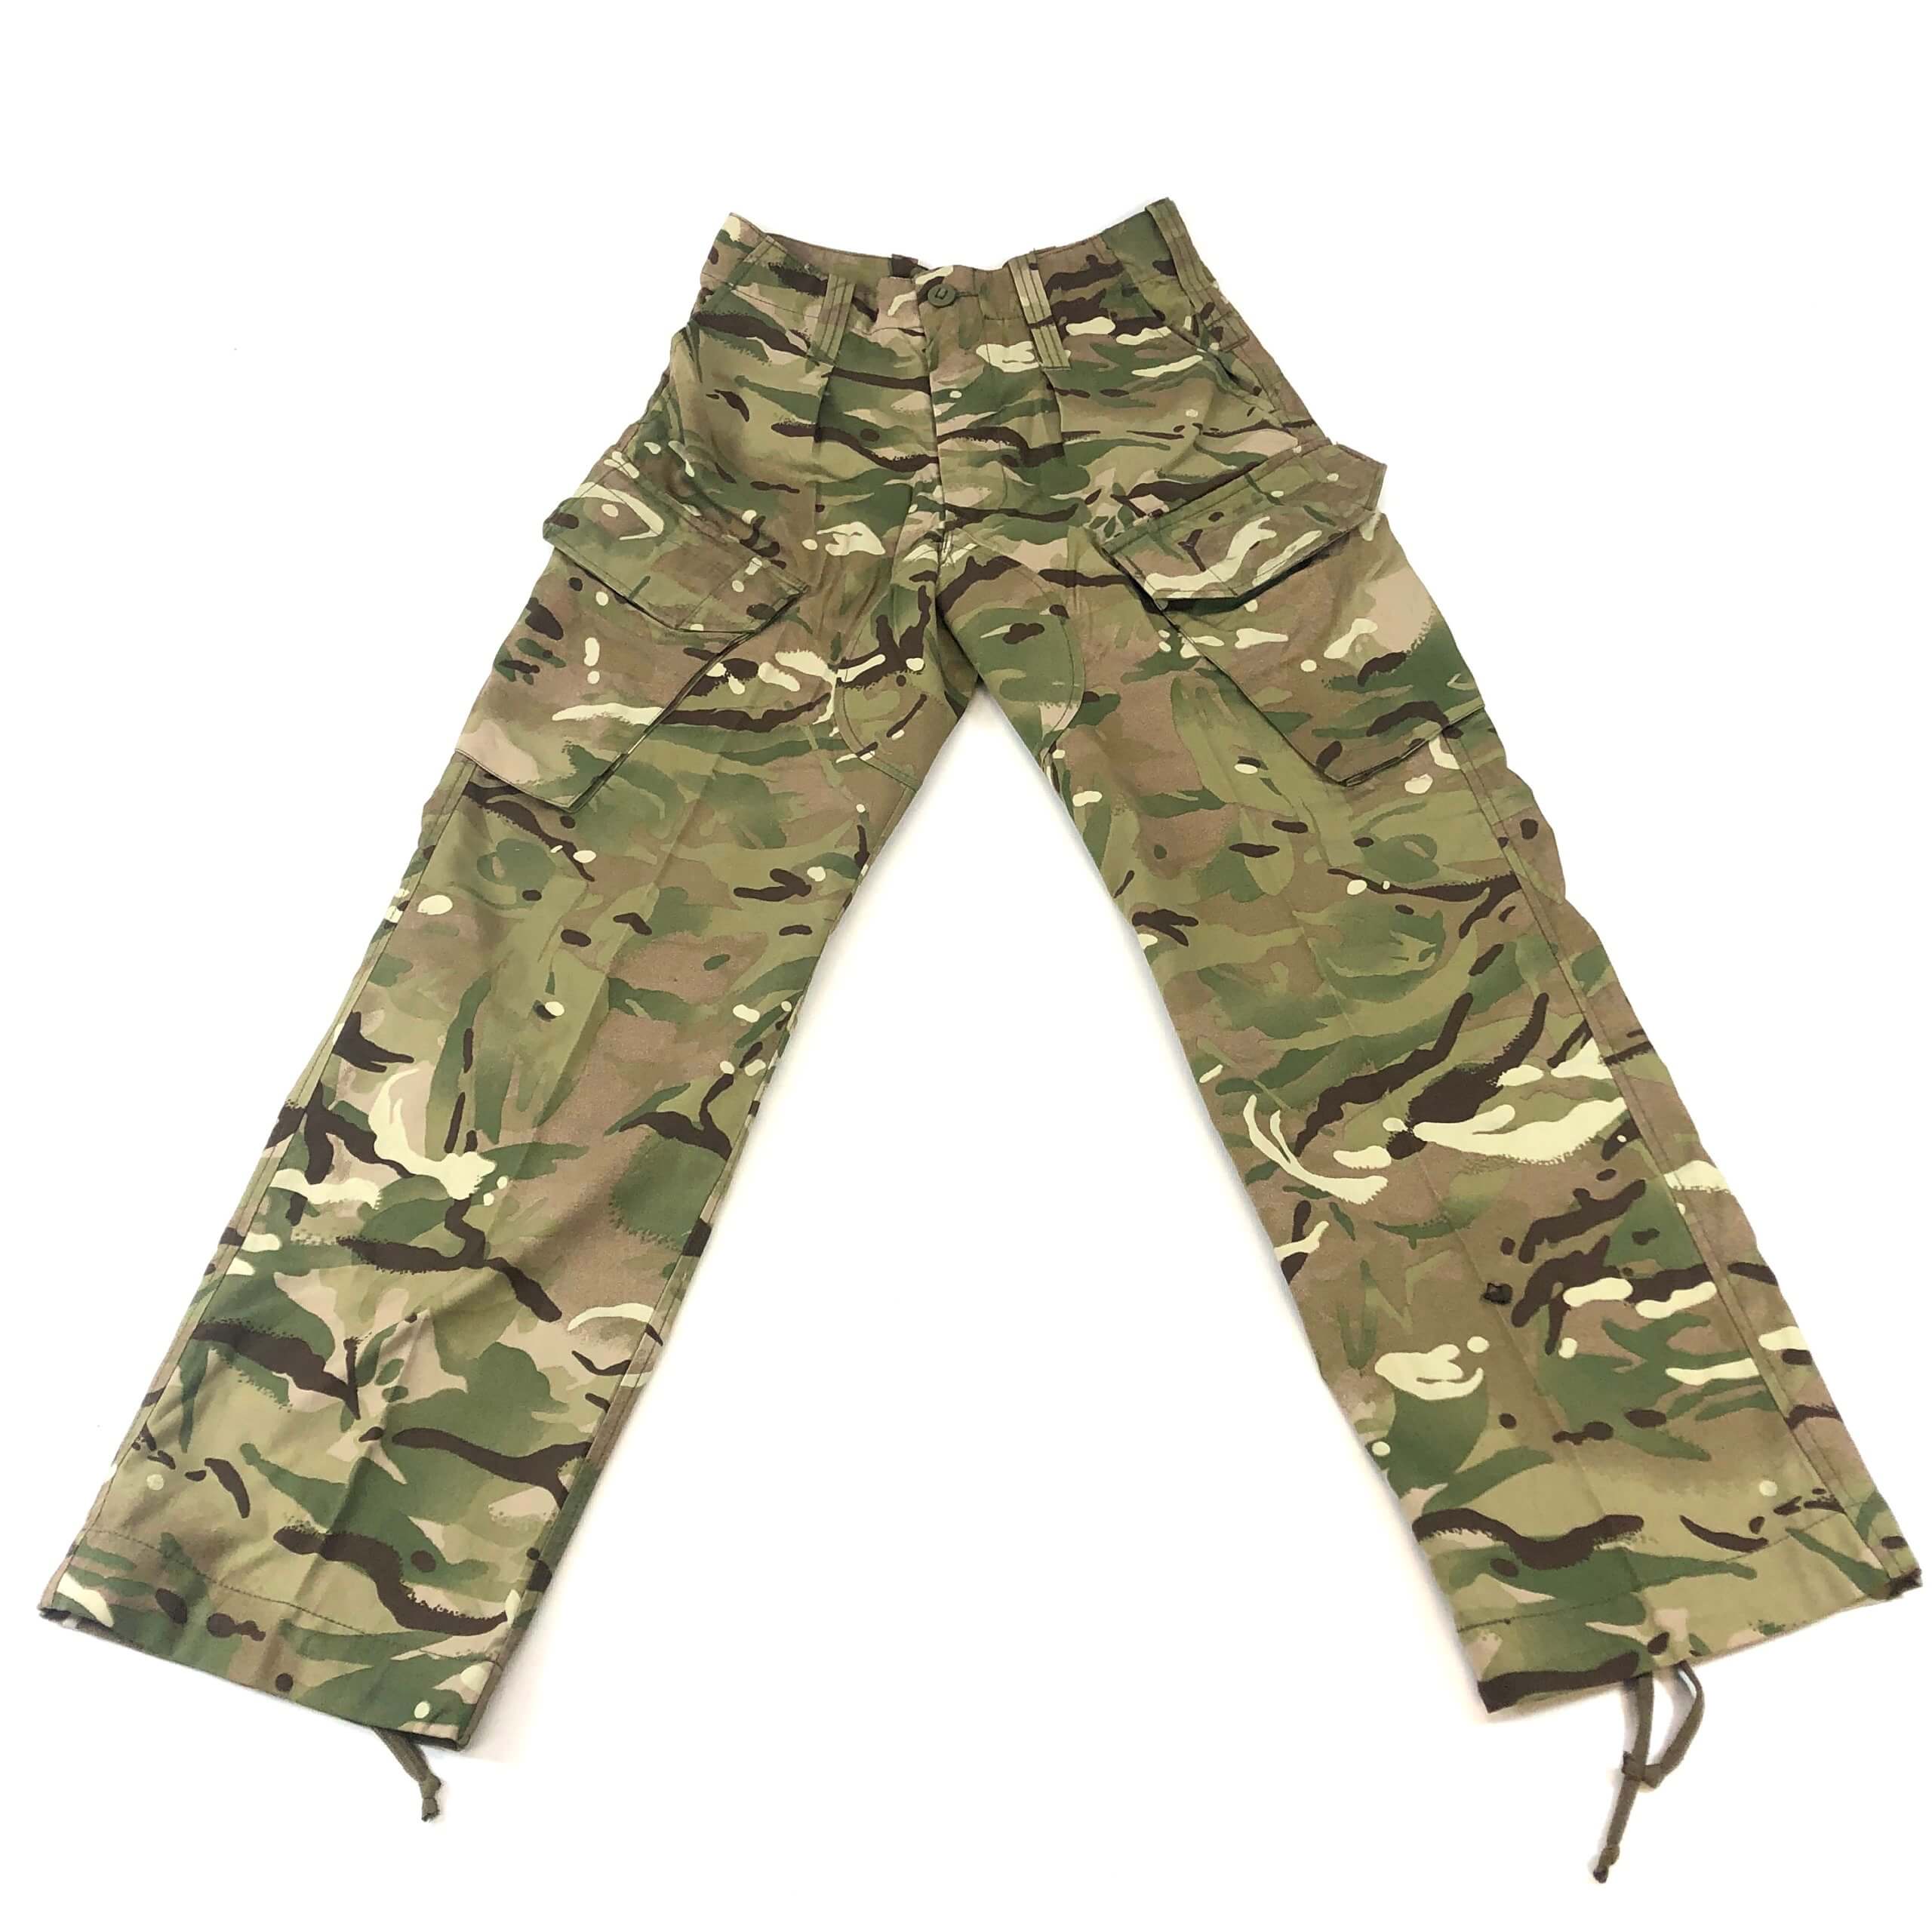 Trousers Combat Windproof,Multi Terrain Pattern,Multicam,MTP Gr 76/80/96,Small